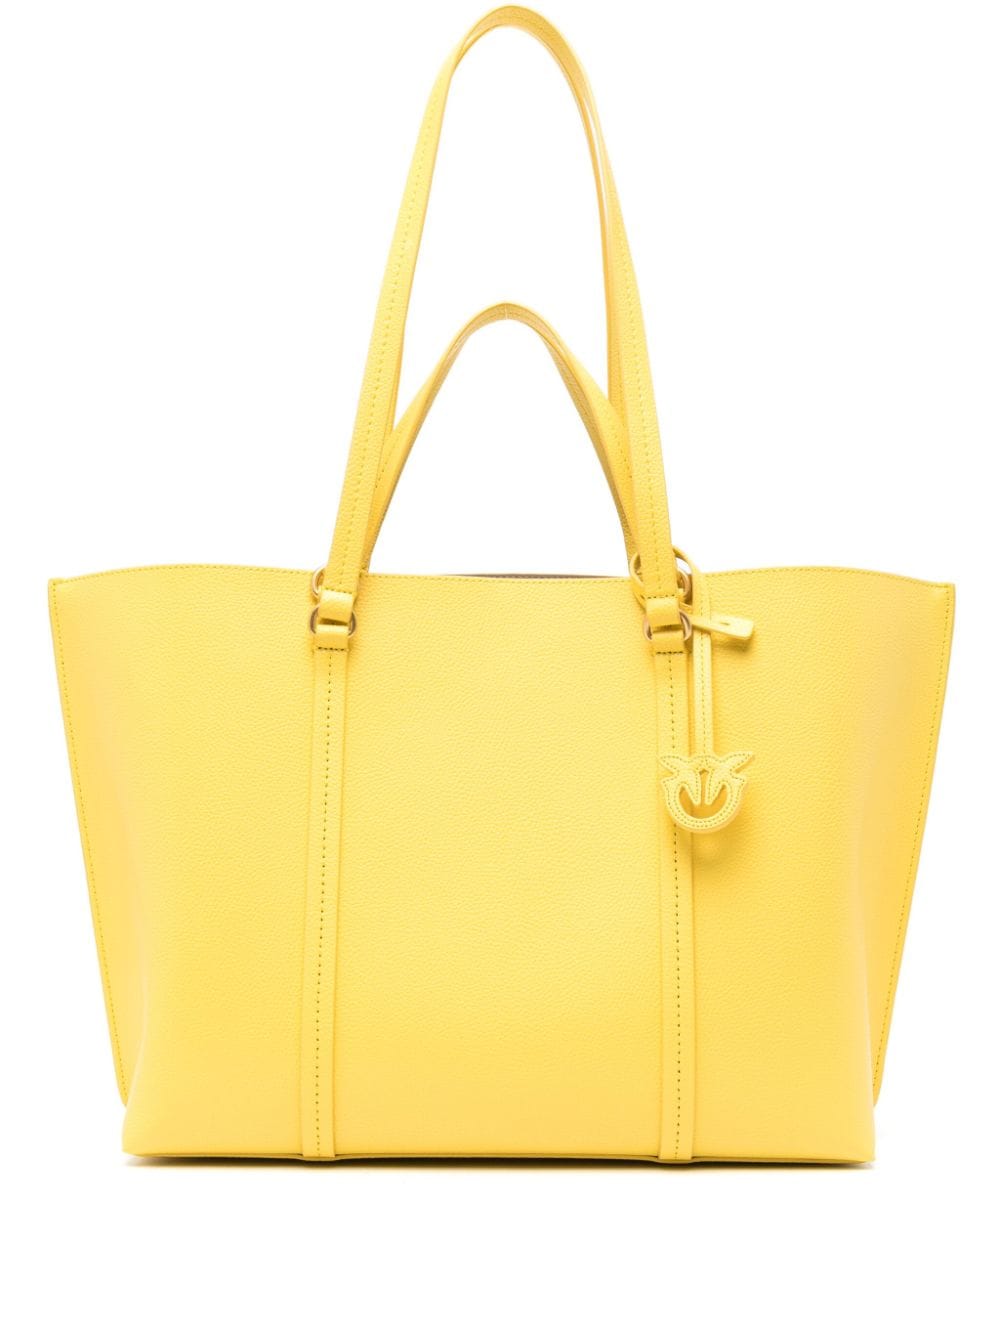 PINKO large leather tote bag - Yellow von PINKO